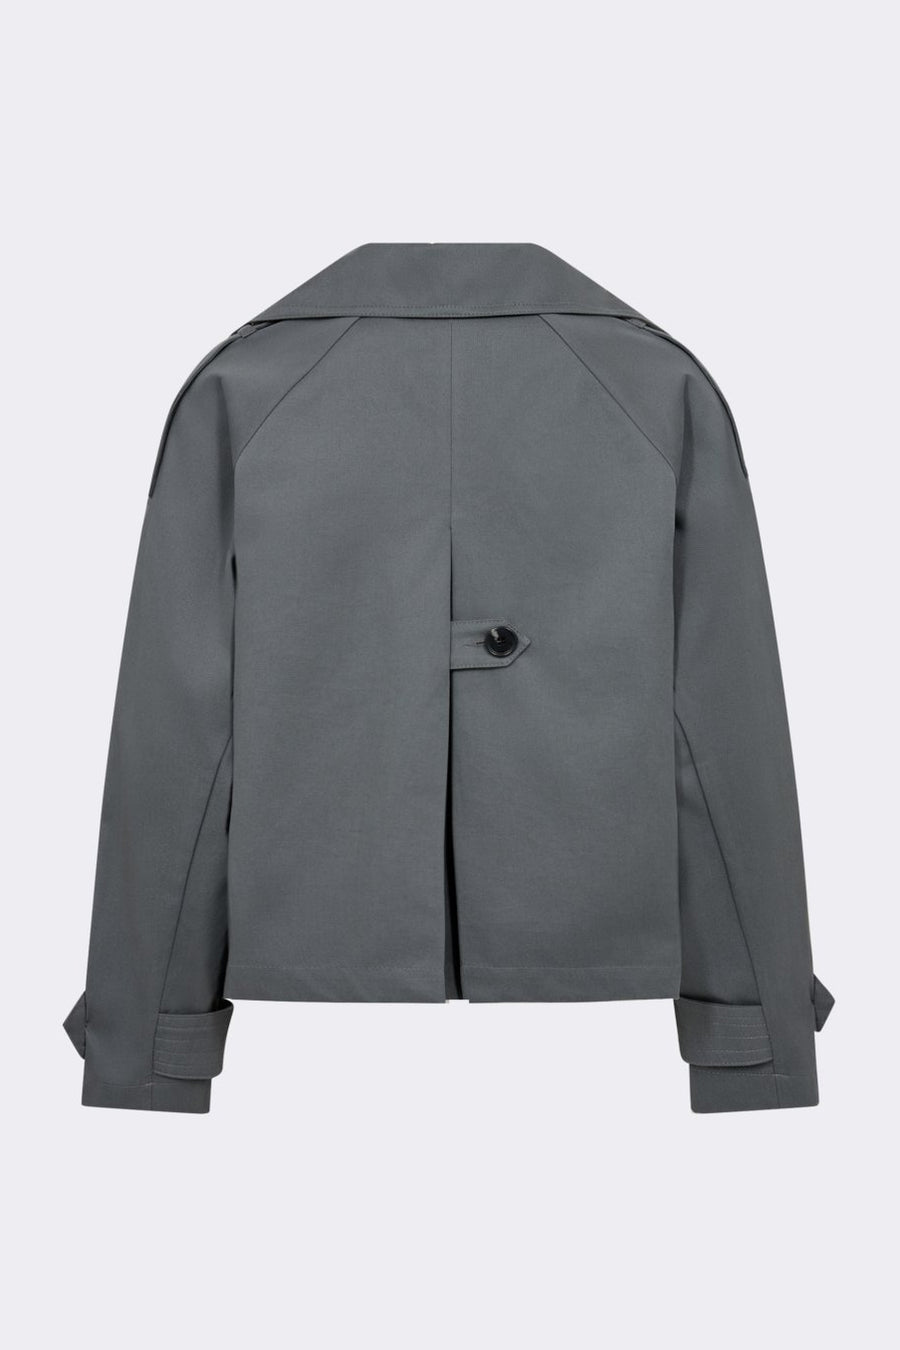 LR-Filis 2 Short Jacket Grey